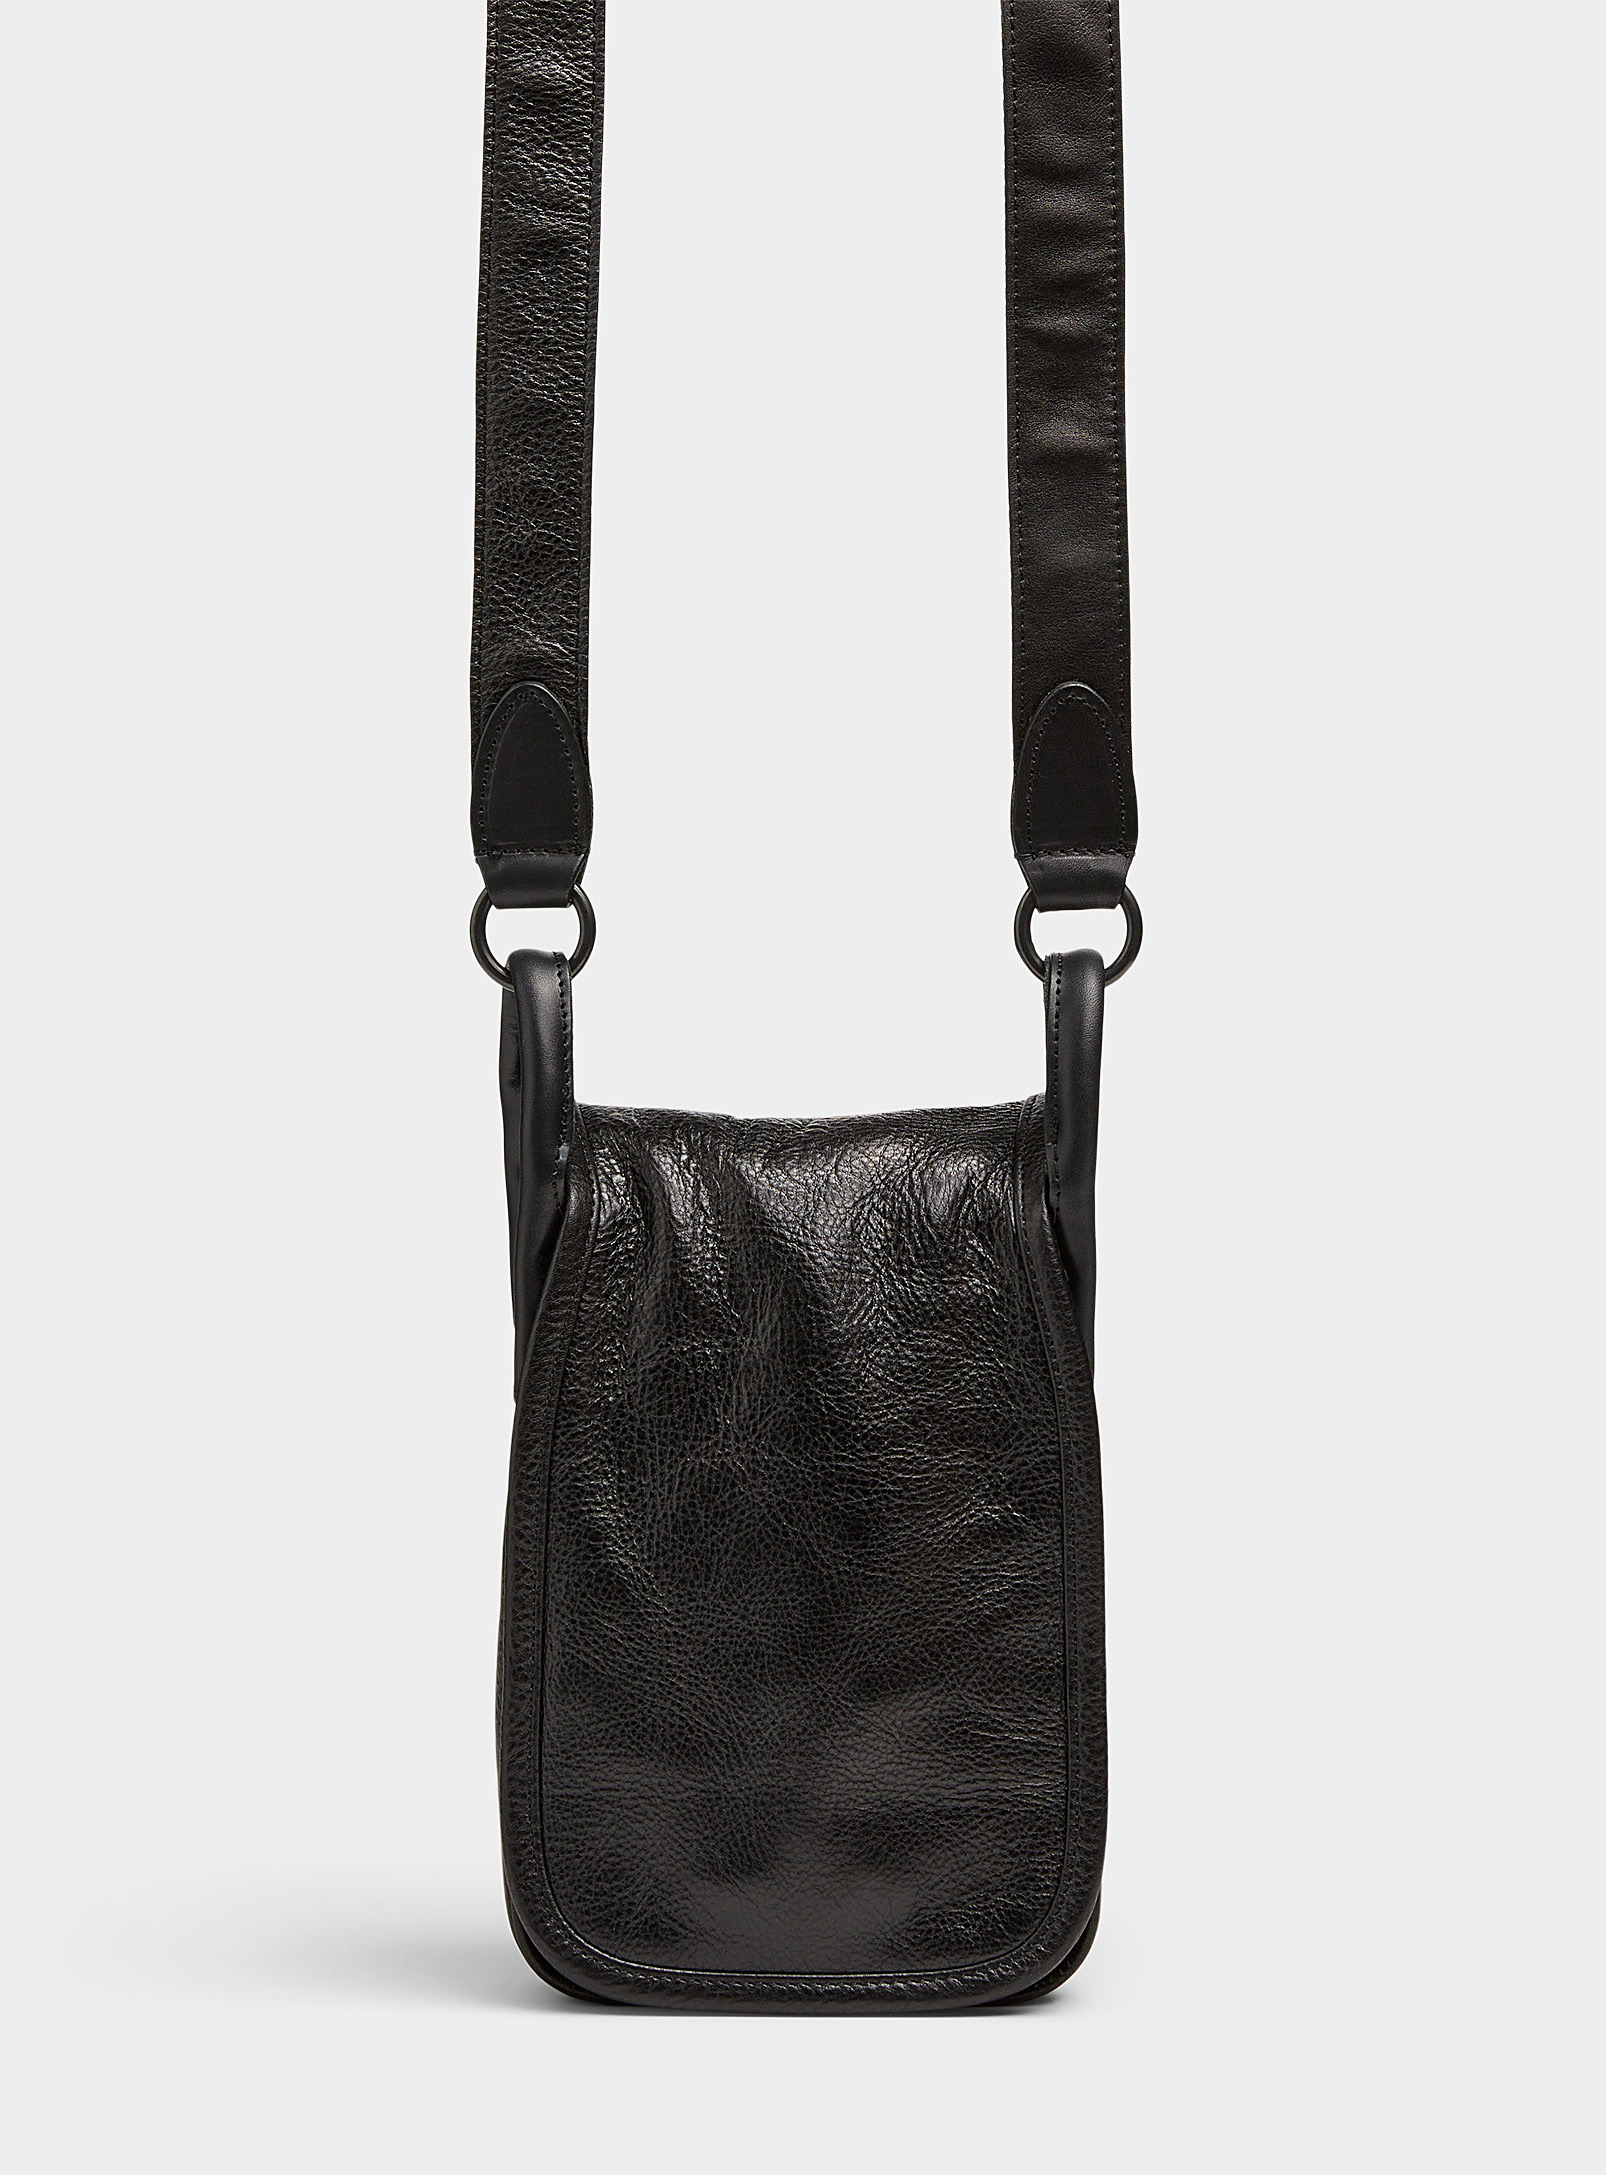 Yohji Yamamoto - Men's Small grained leather cross-body bag